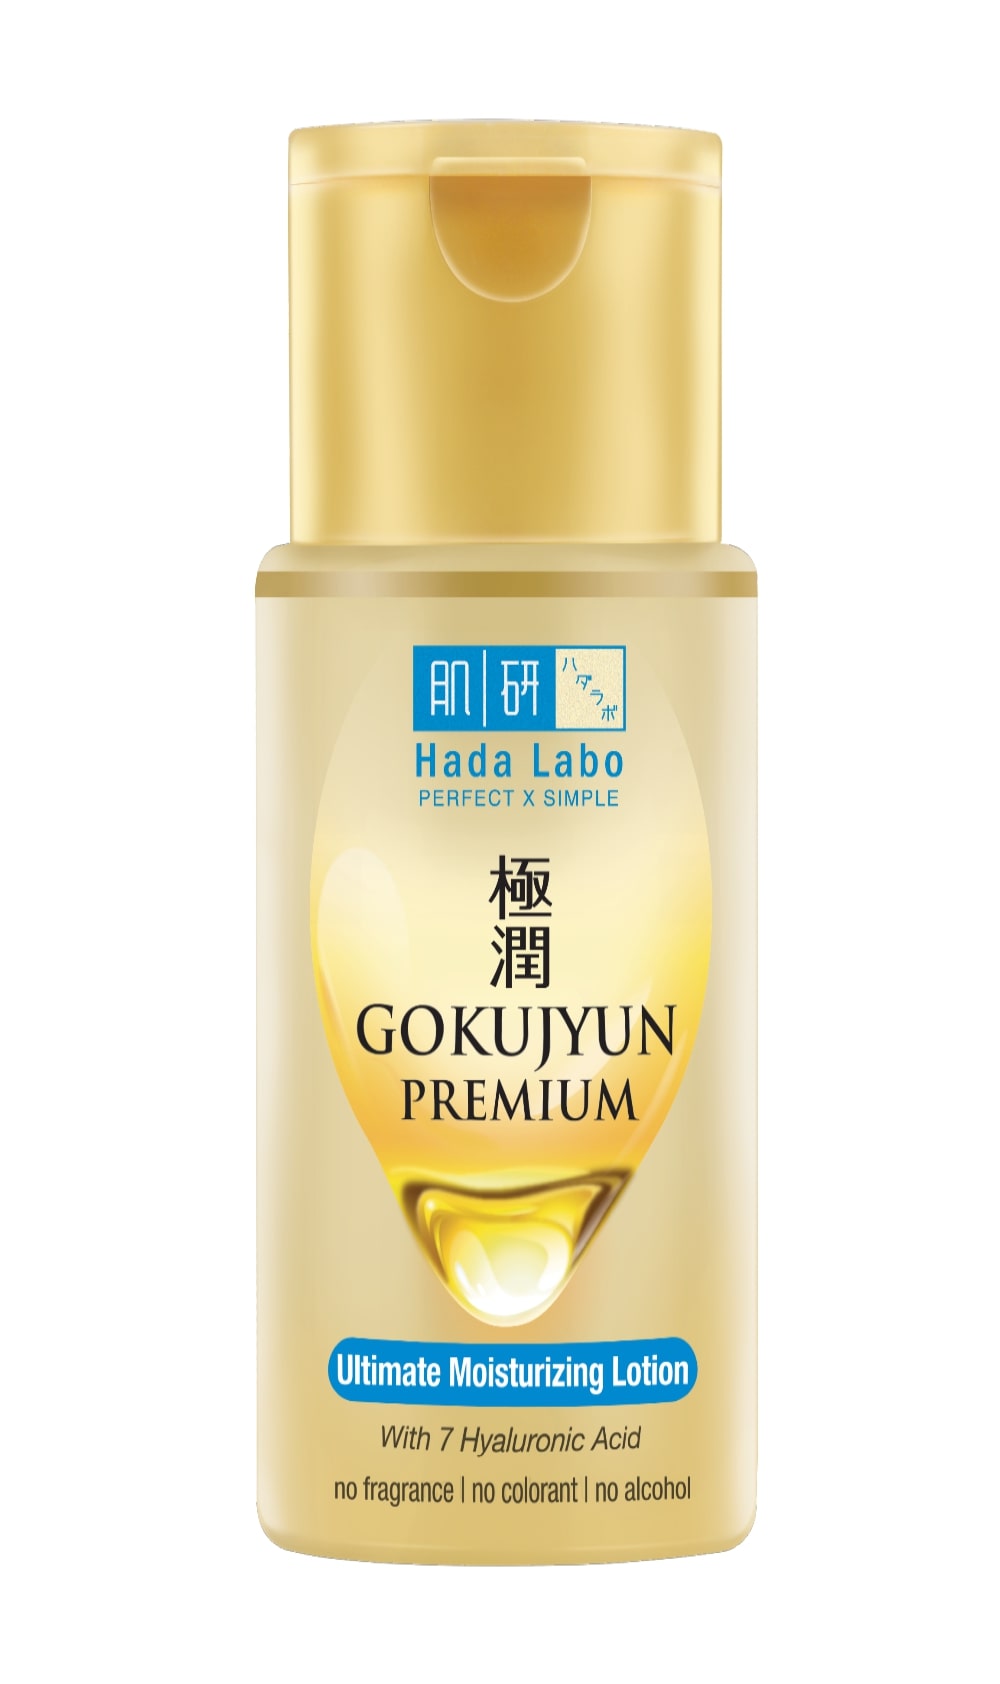 (Hada Labo Gokujyun Premium Ultimate Moisturizing Lotion. Foto: Dok. rohto.co.id)